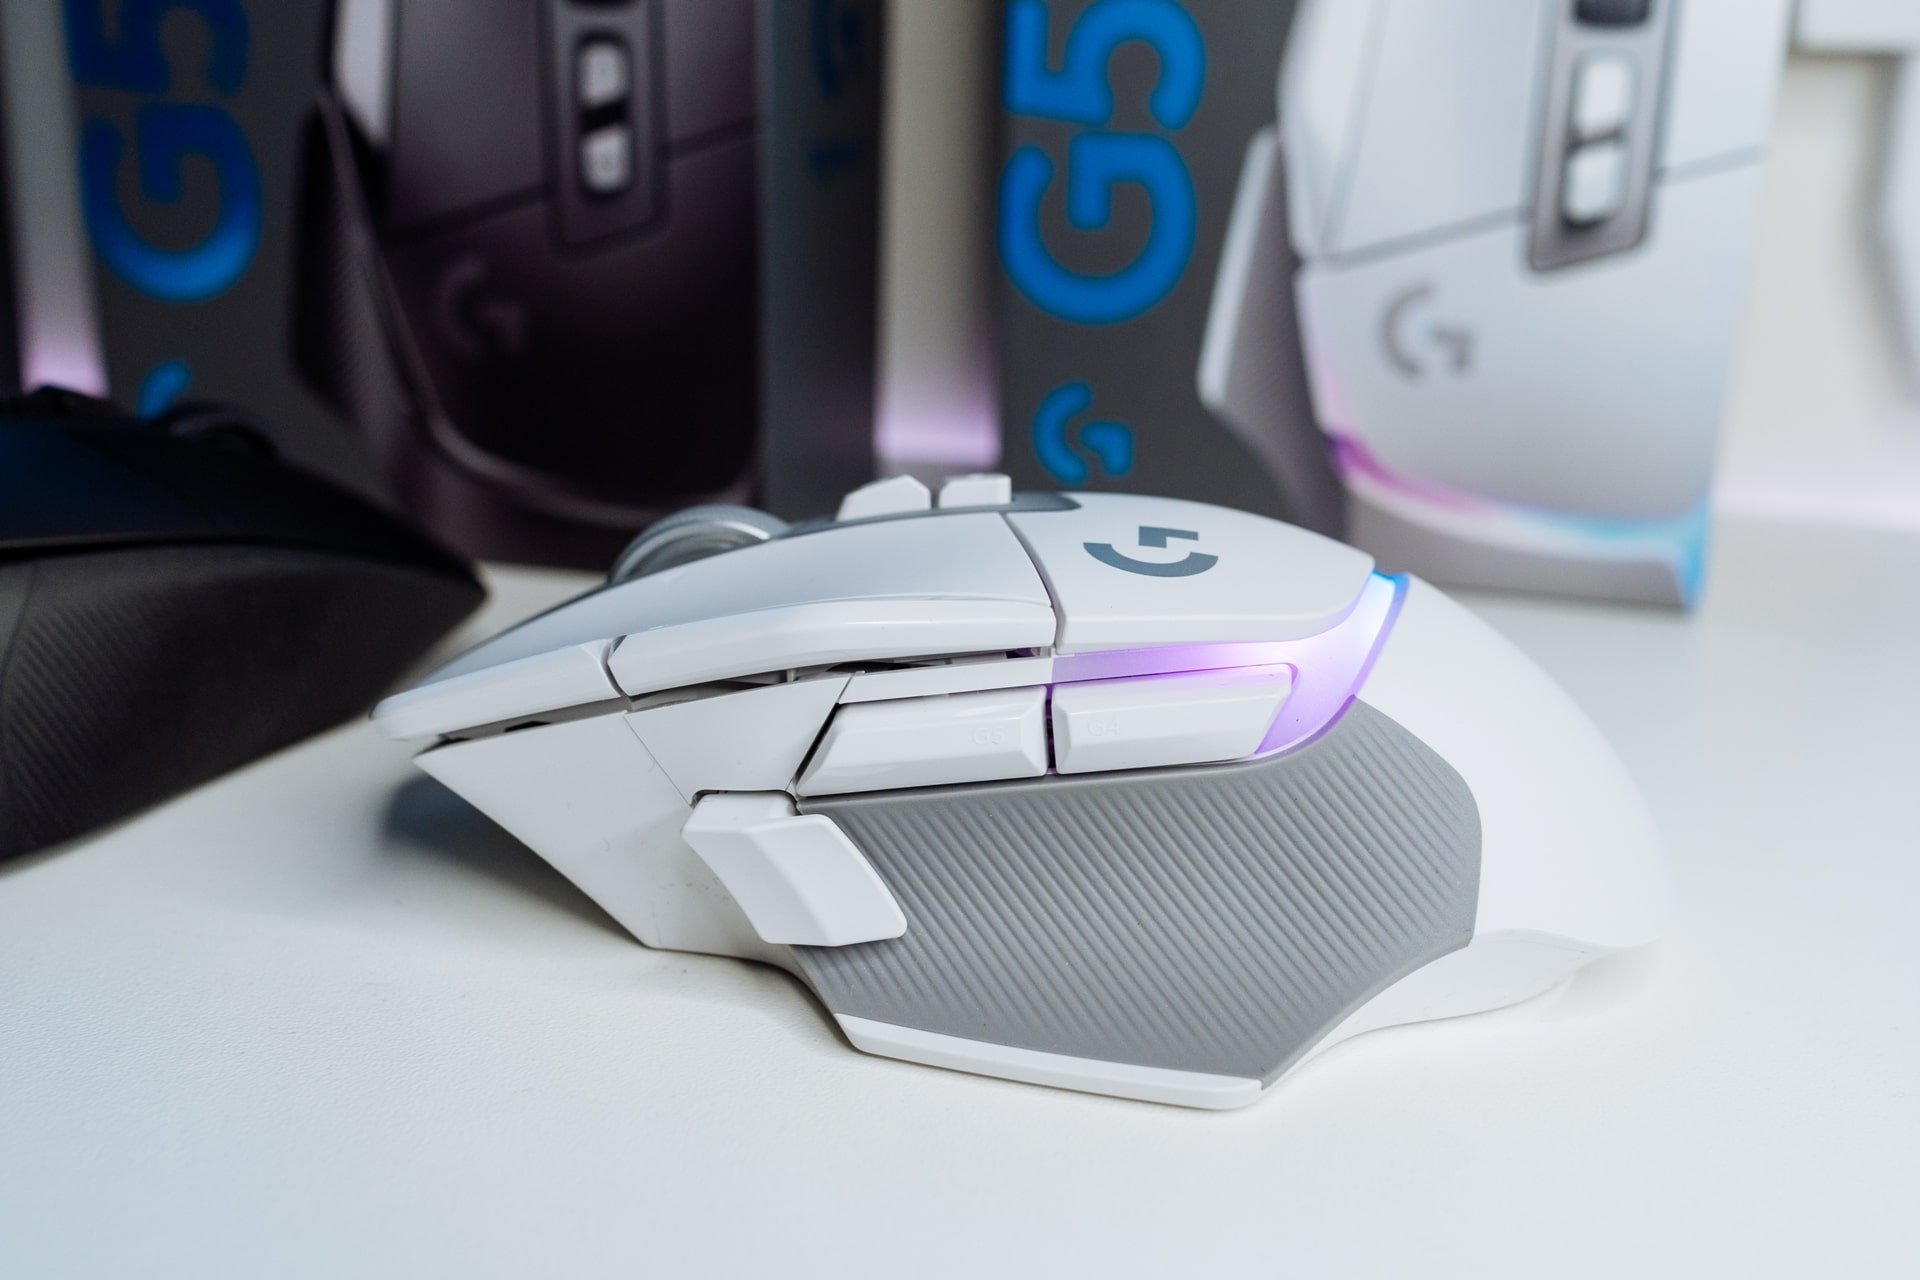 Logitech G502 X PLUS LIGHTSPEED Wireless Gaming Mouse with HERO 25K Sensor  White 910-006169 - Best Buy